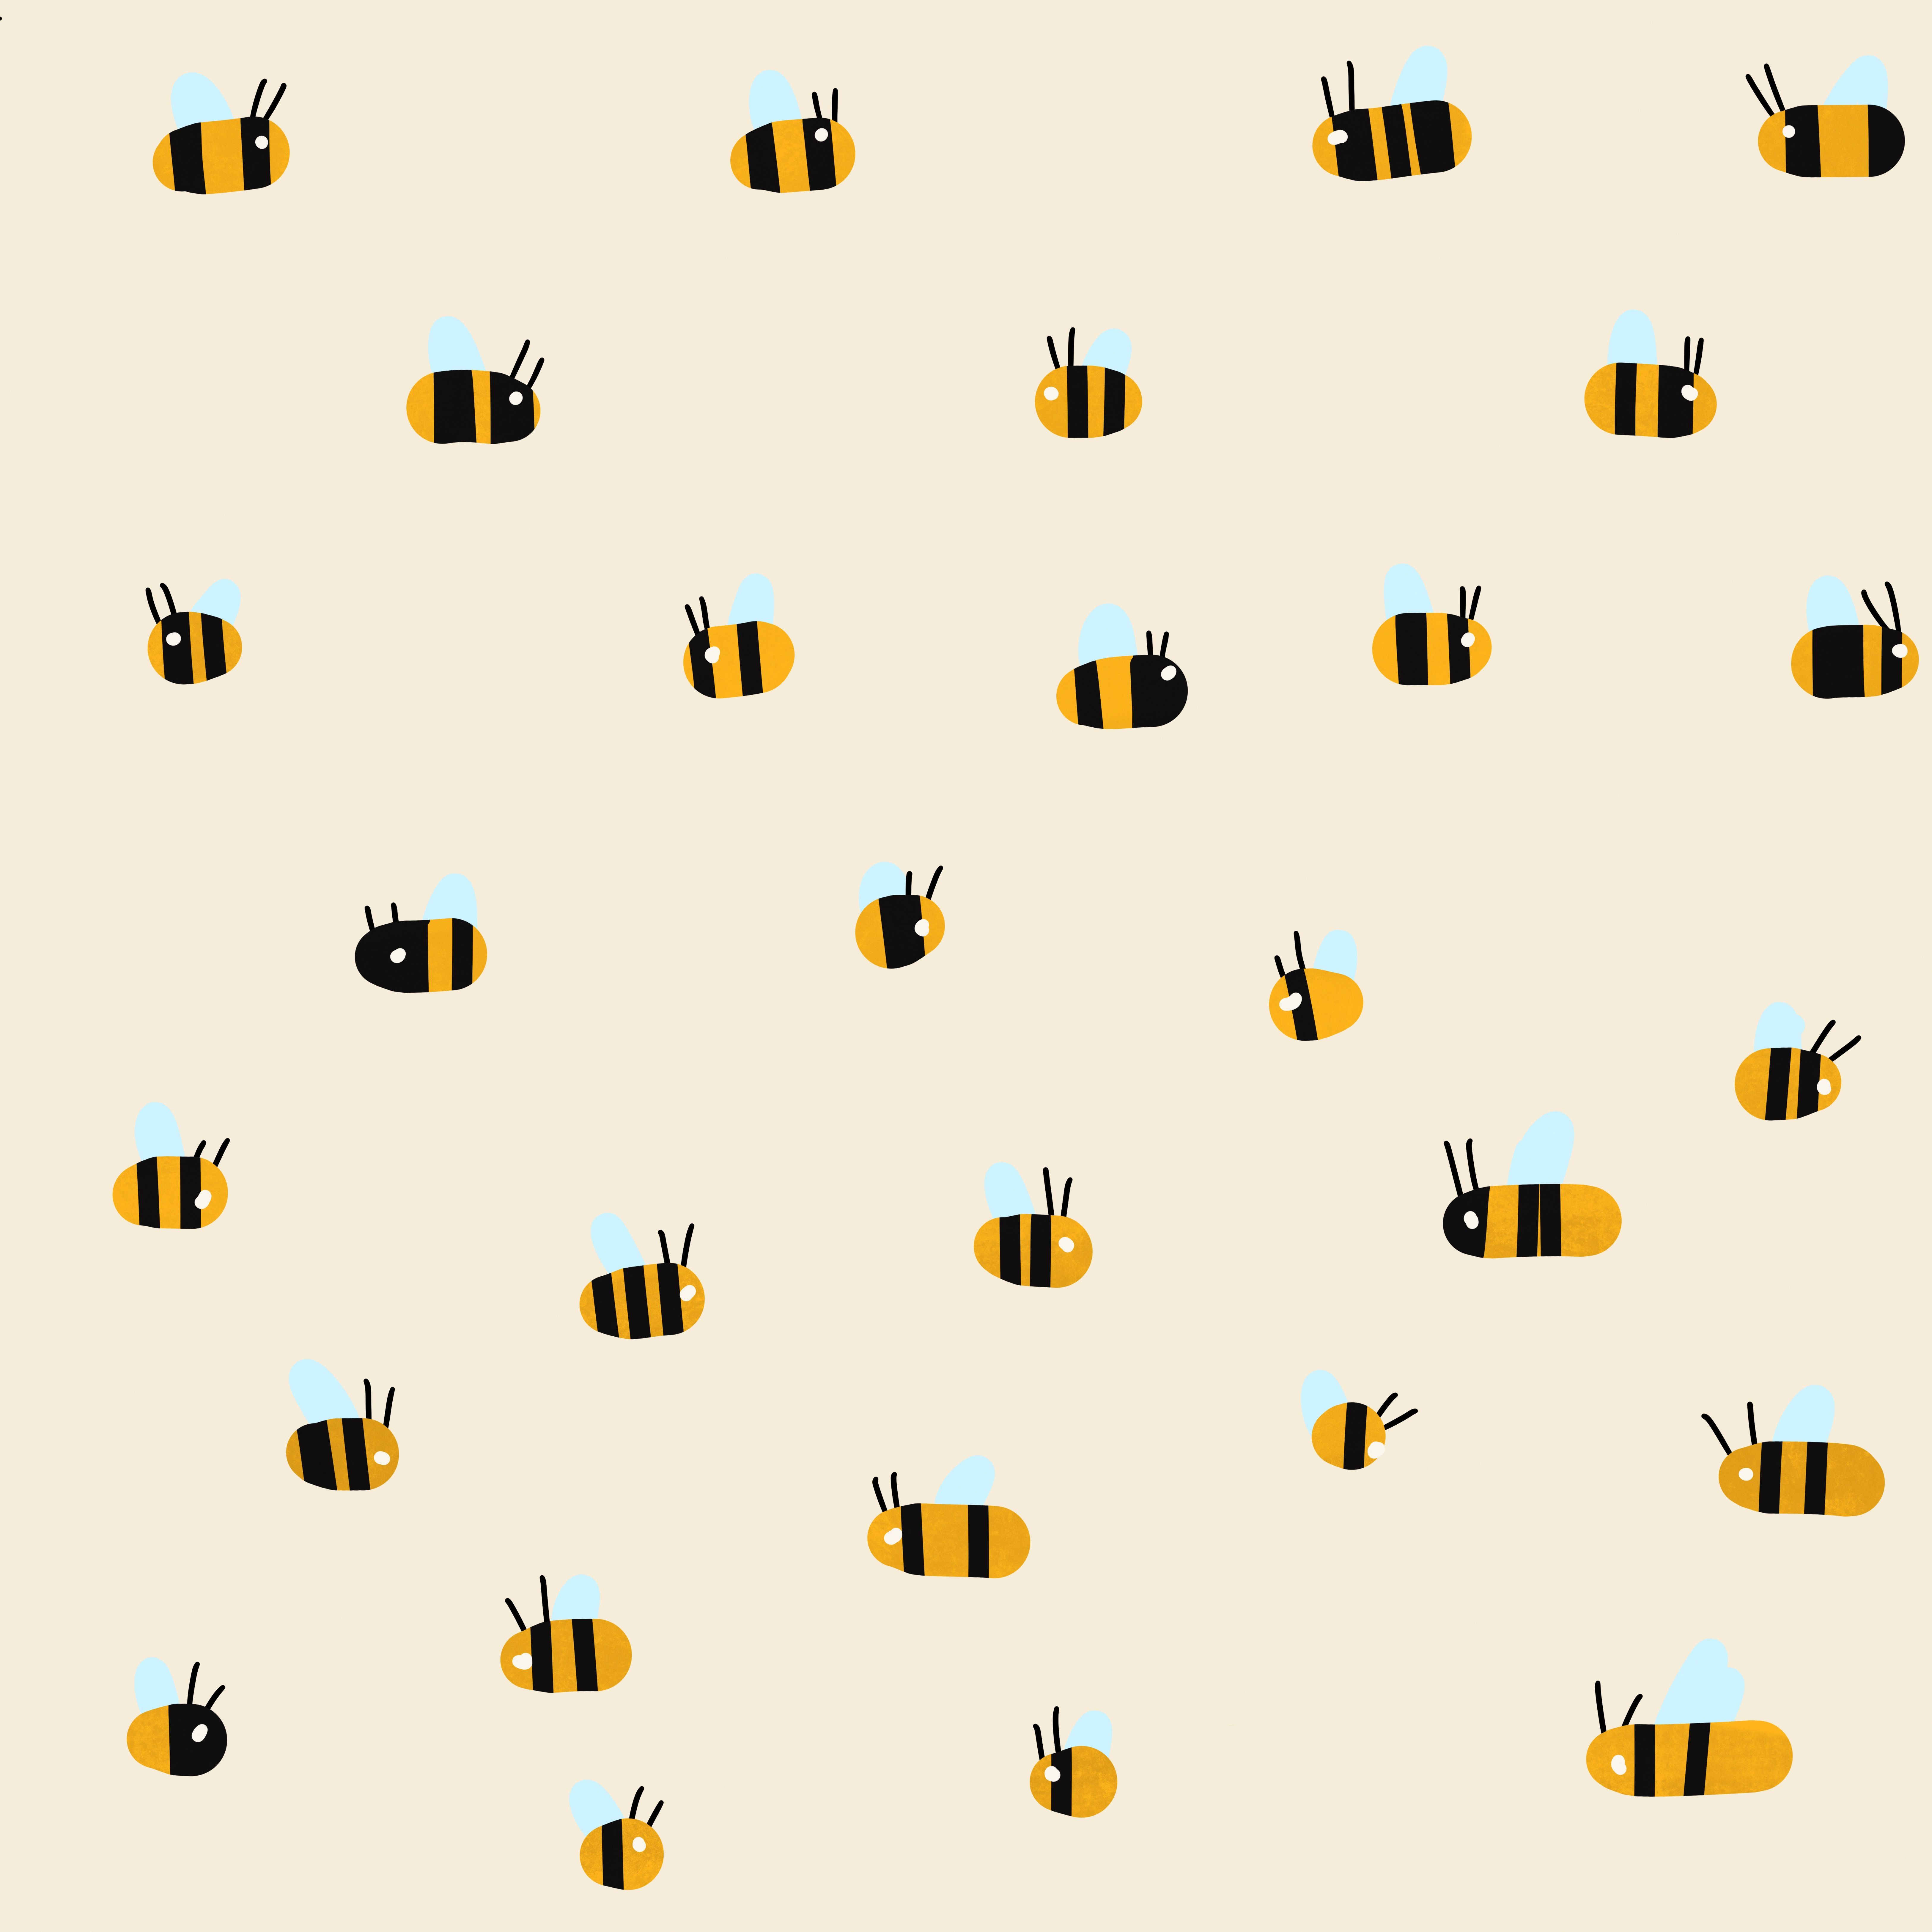 Aesthetic Bee Computer Wallpapers